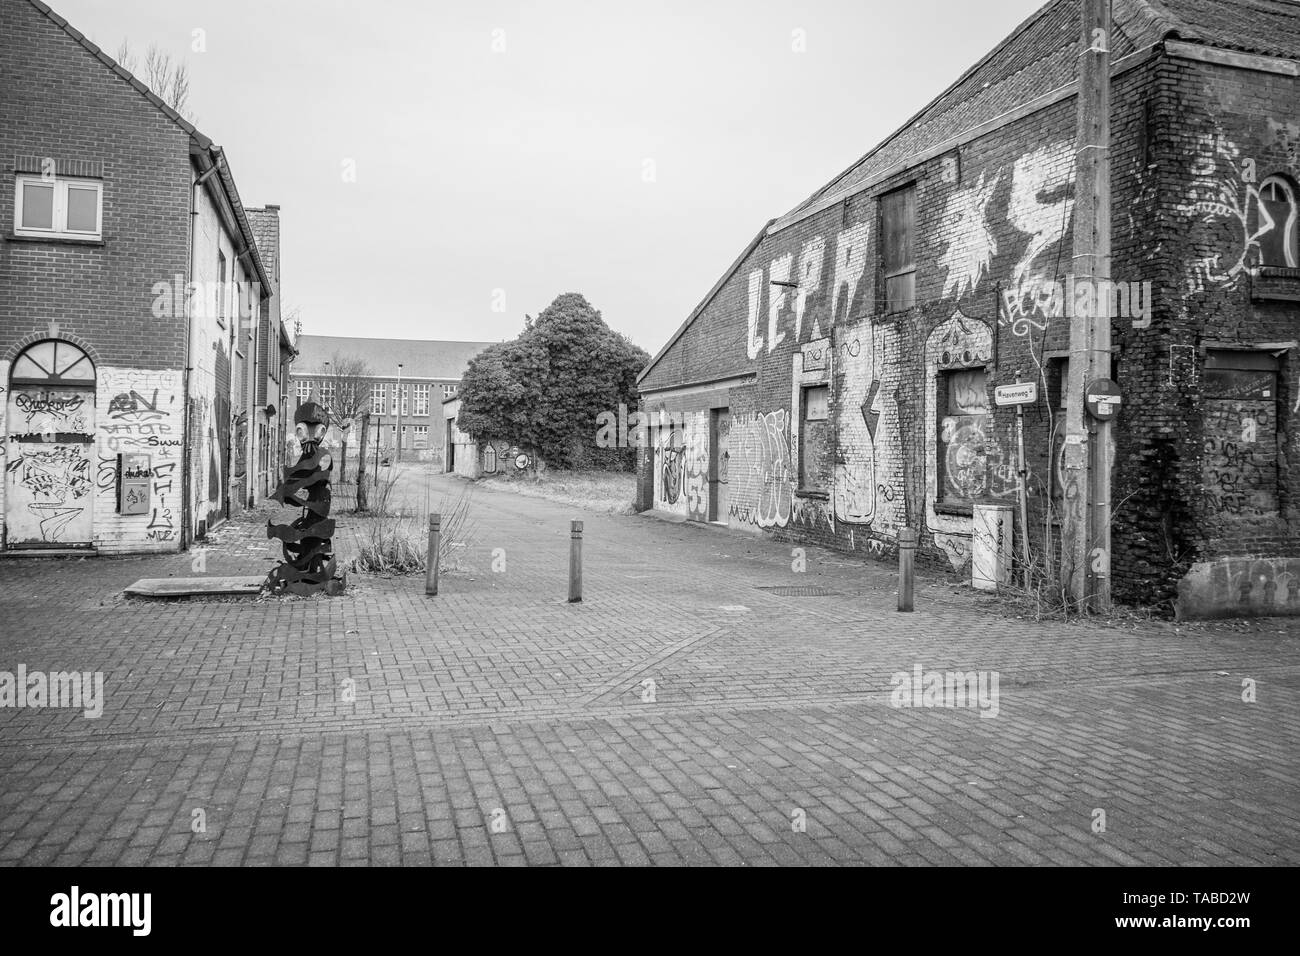 Abandoned town of Doel in Belgium Stock Photo